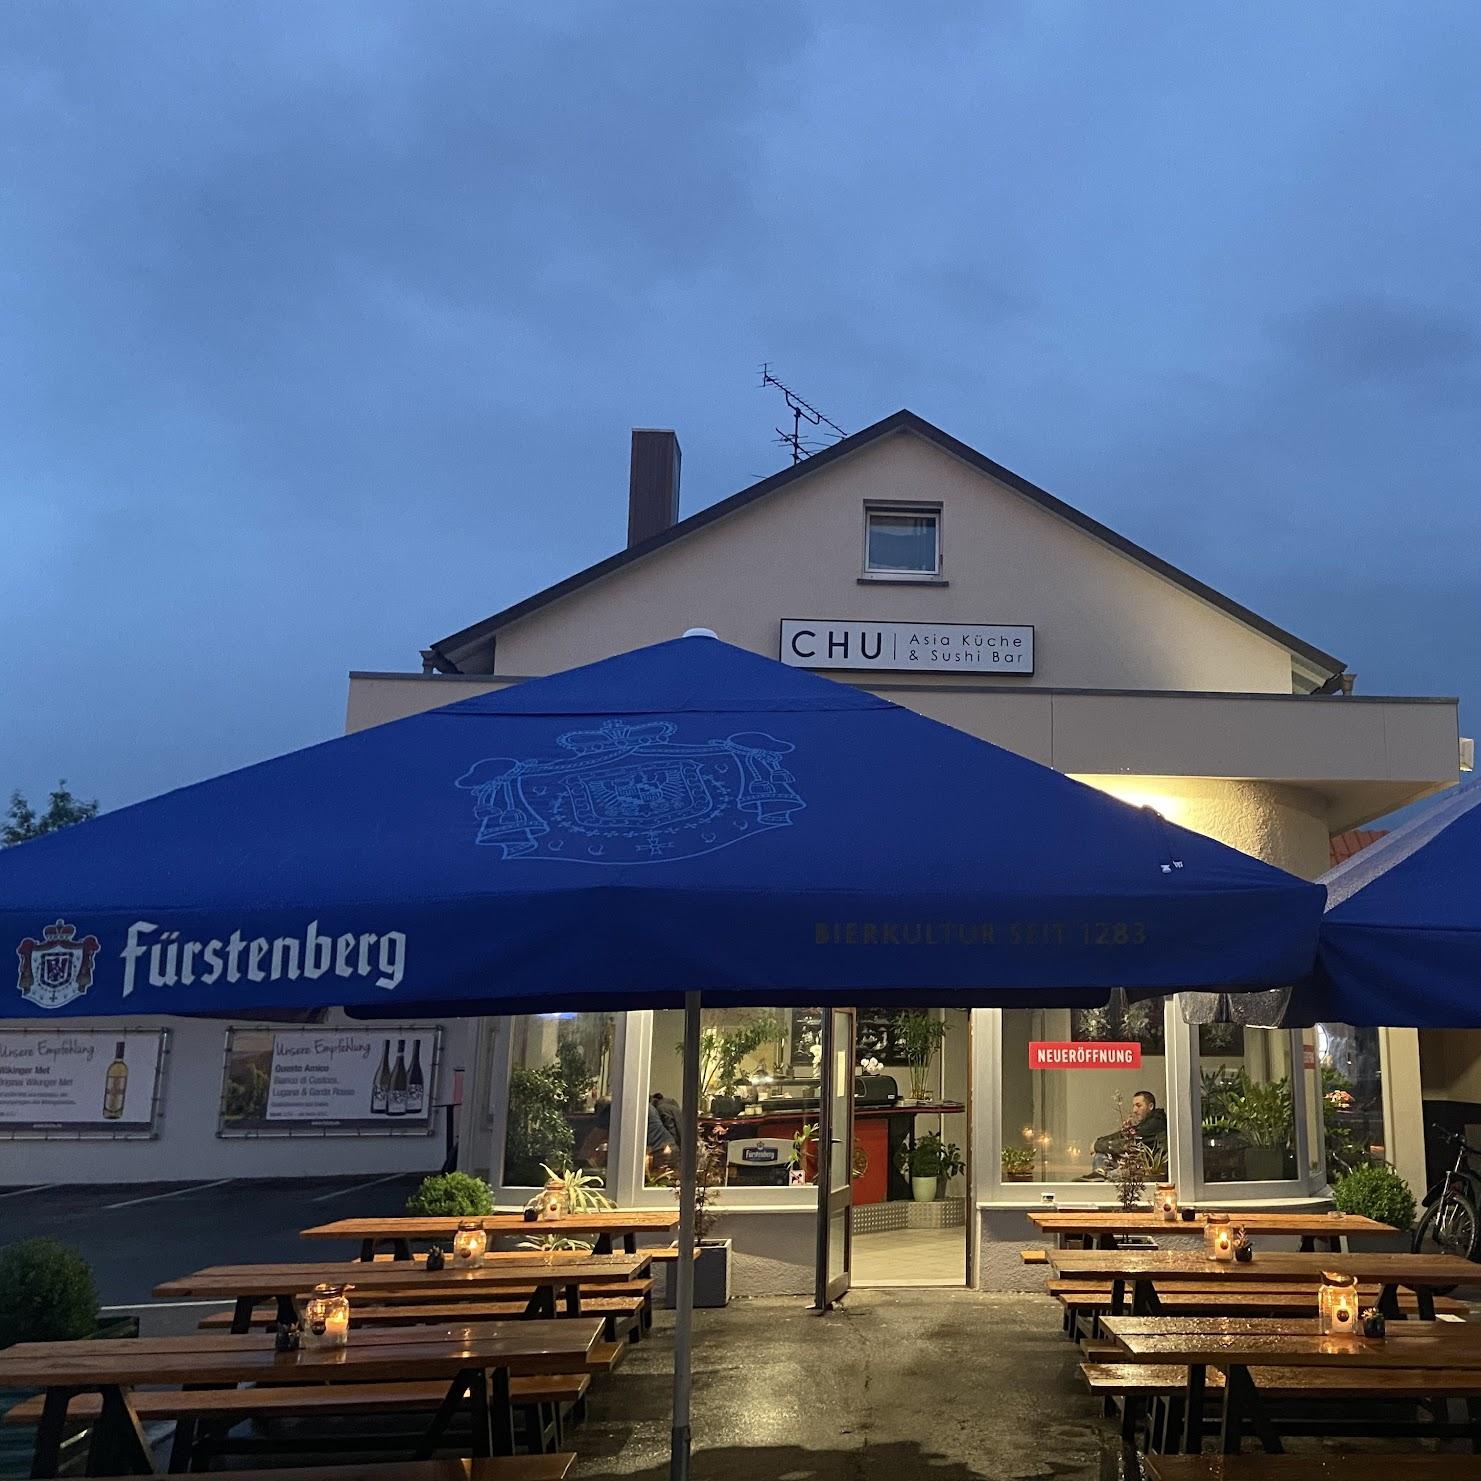 Restaurant "Chu Restaurant" in Pfullendorf